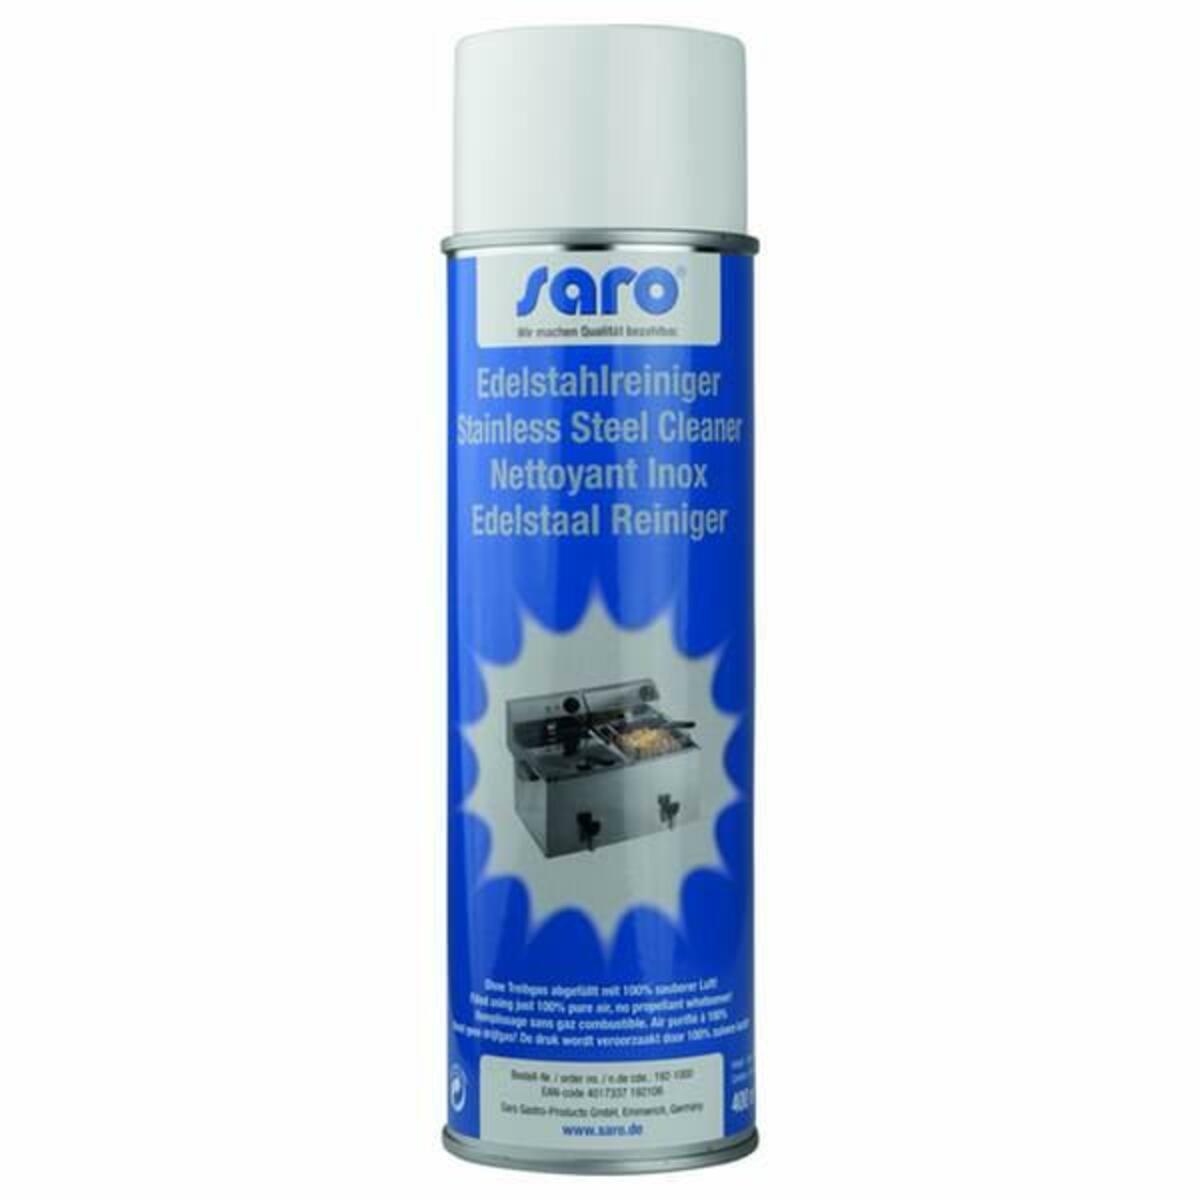 Spray nettoyant inox R 50